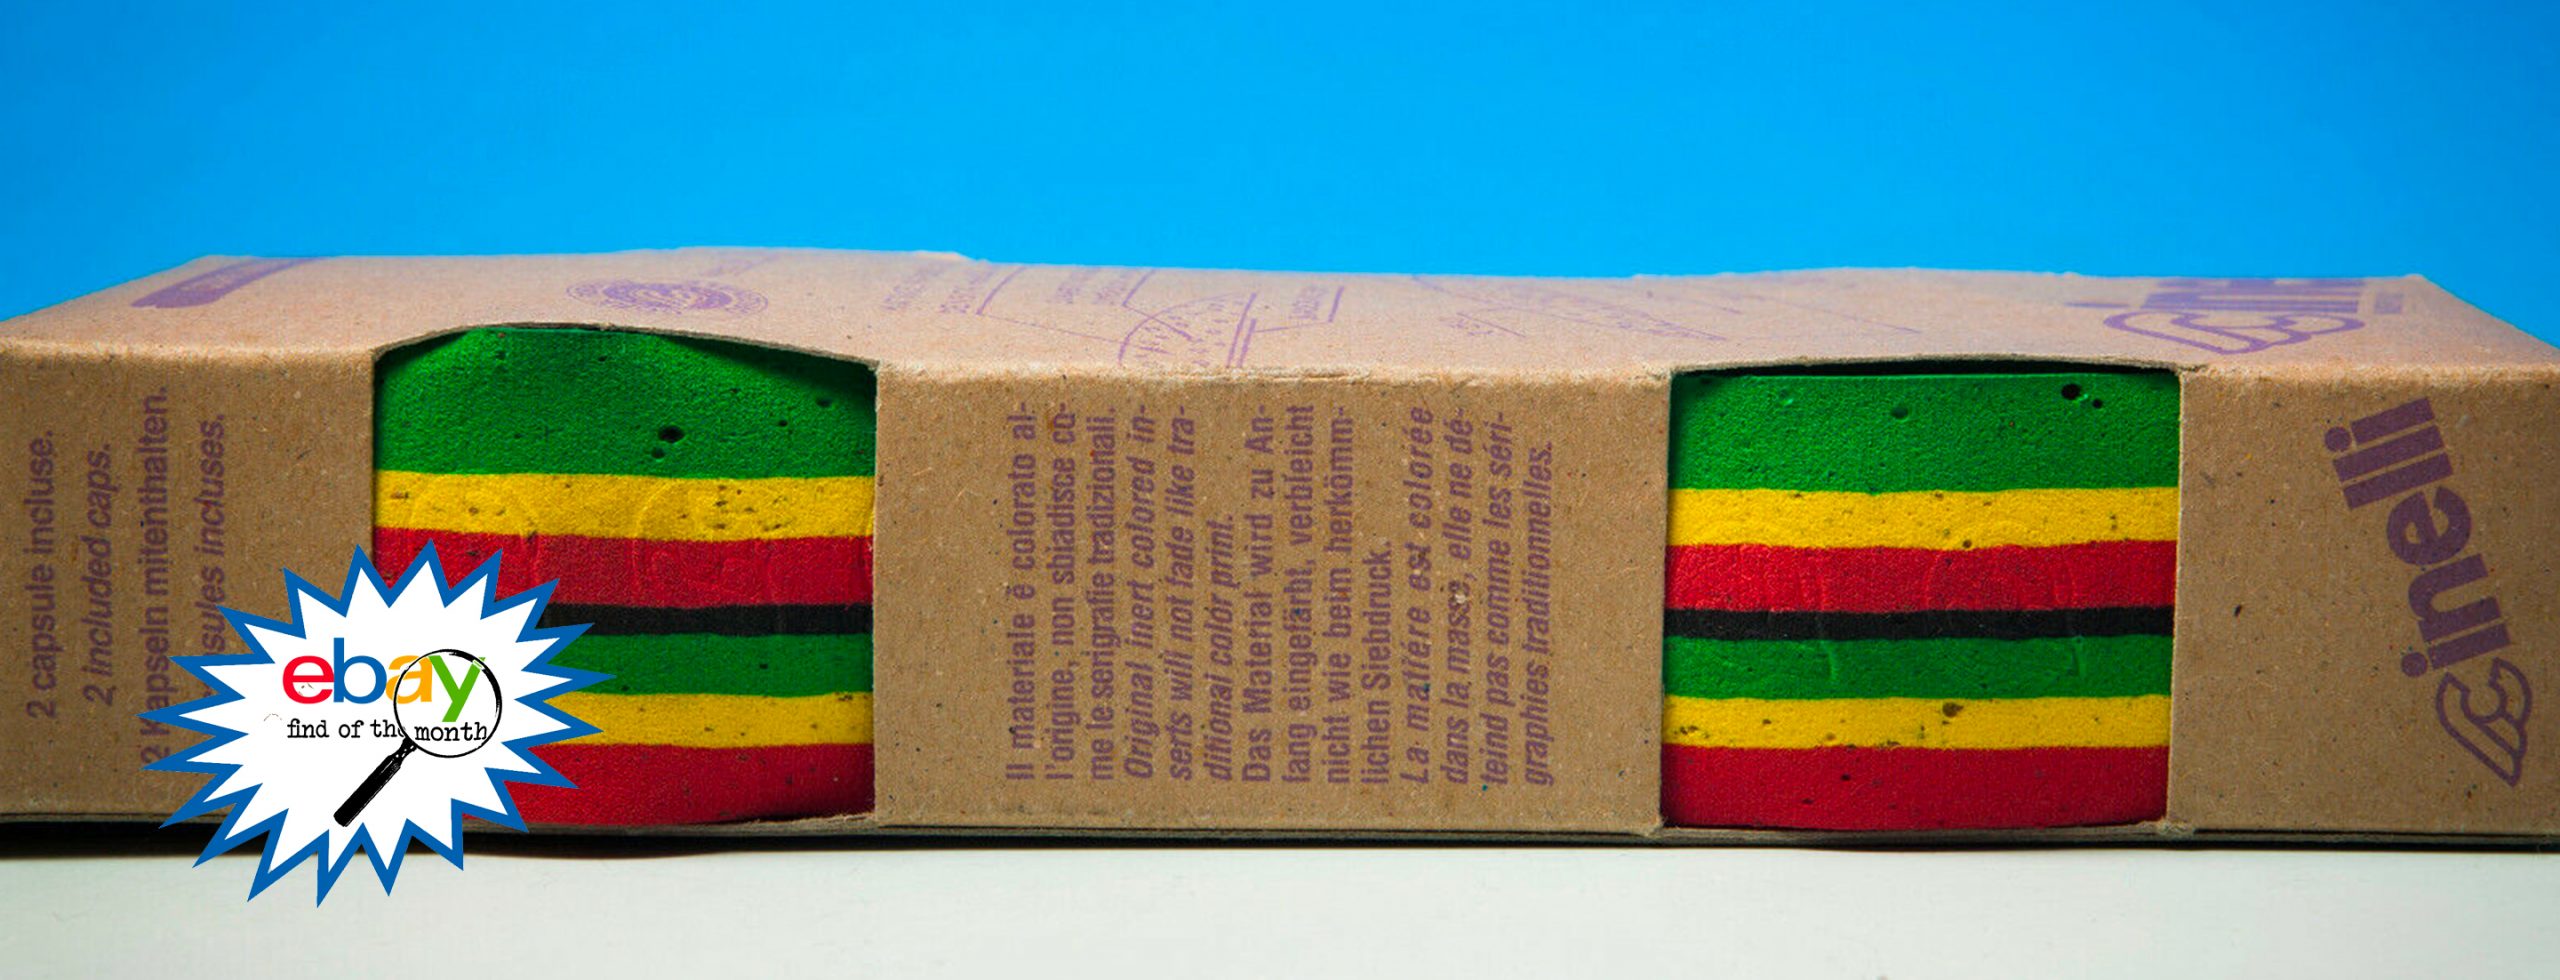 eBay Find of the Month #2: Early 2000s “Rasta” Original Cork Ribbon Bar Tape